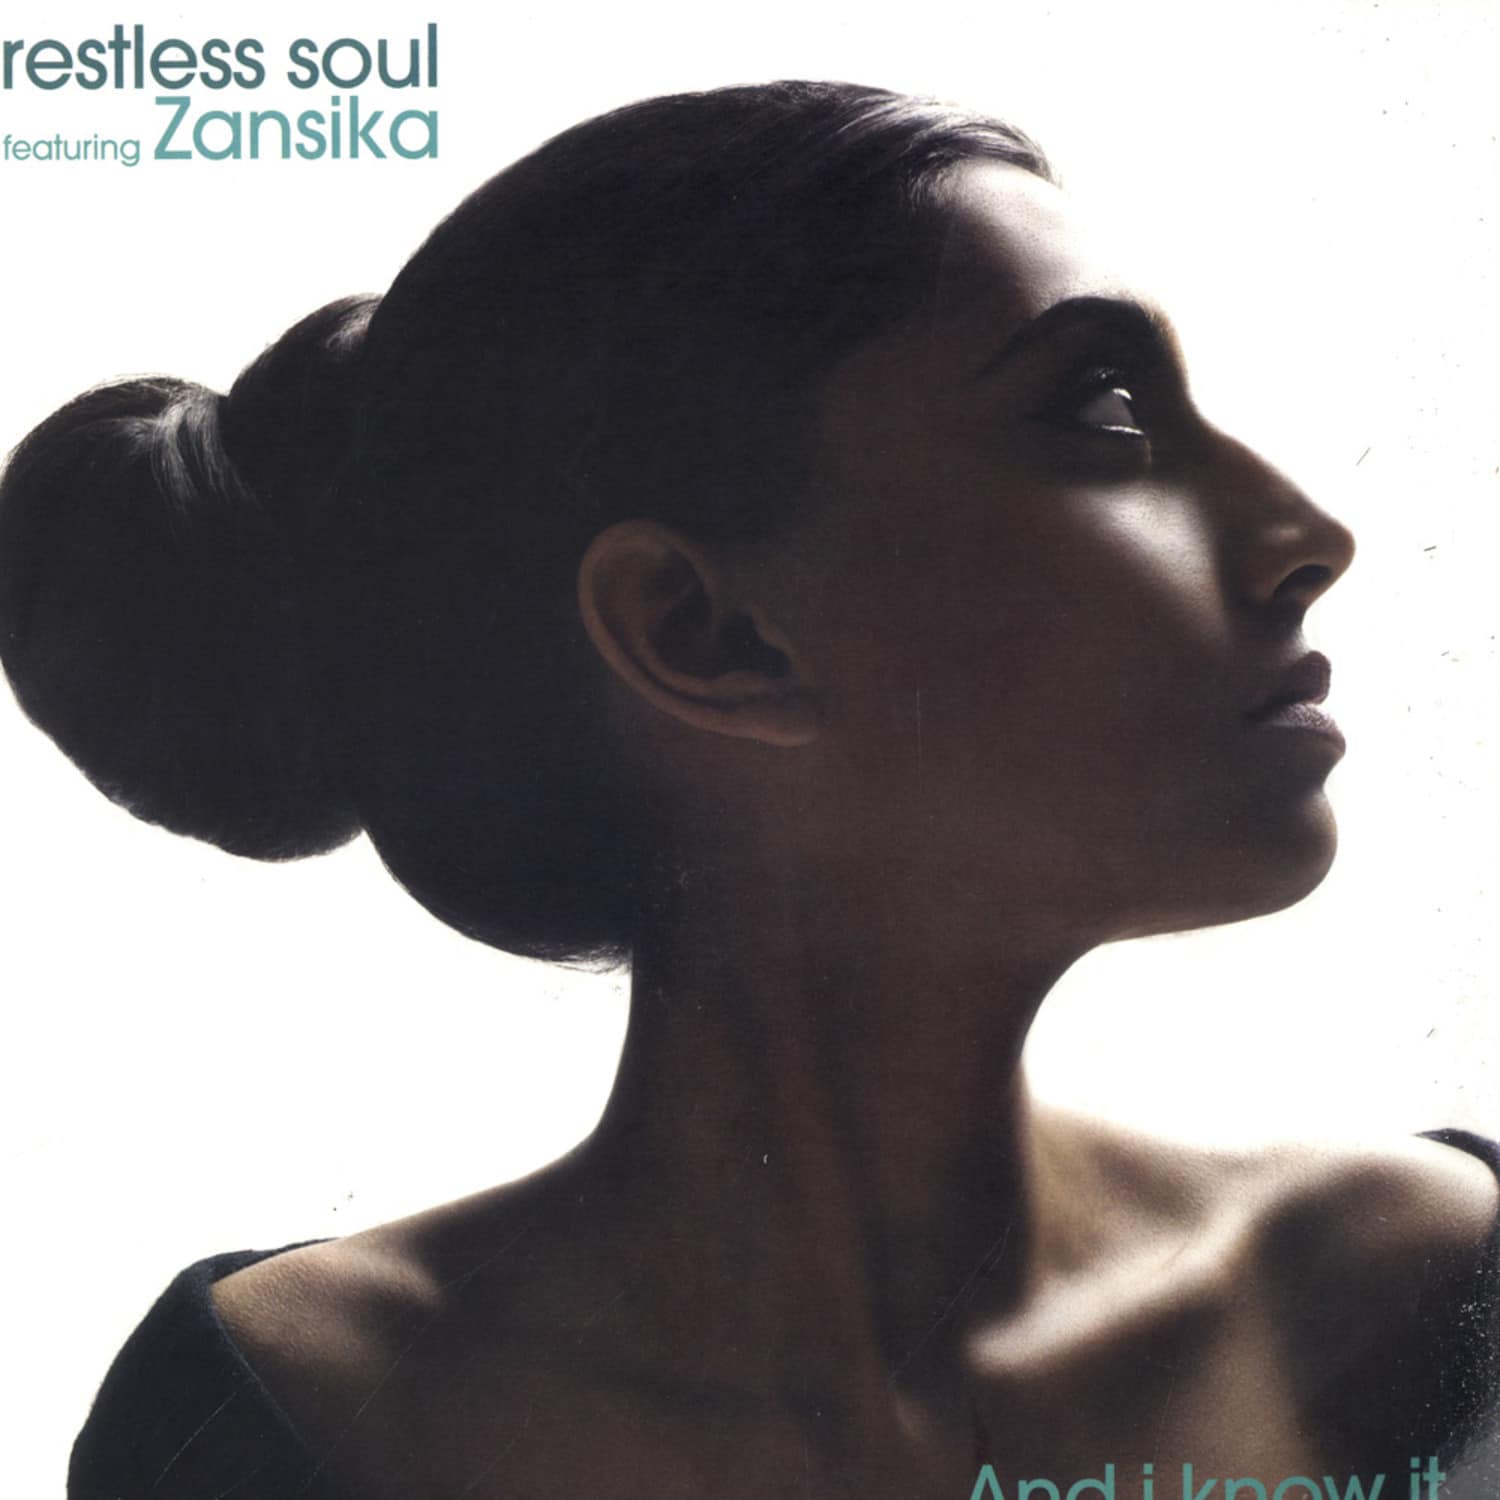 Restless Soul feat. Zaniska - AND I KNOW IT